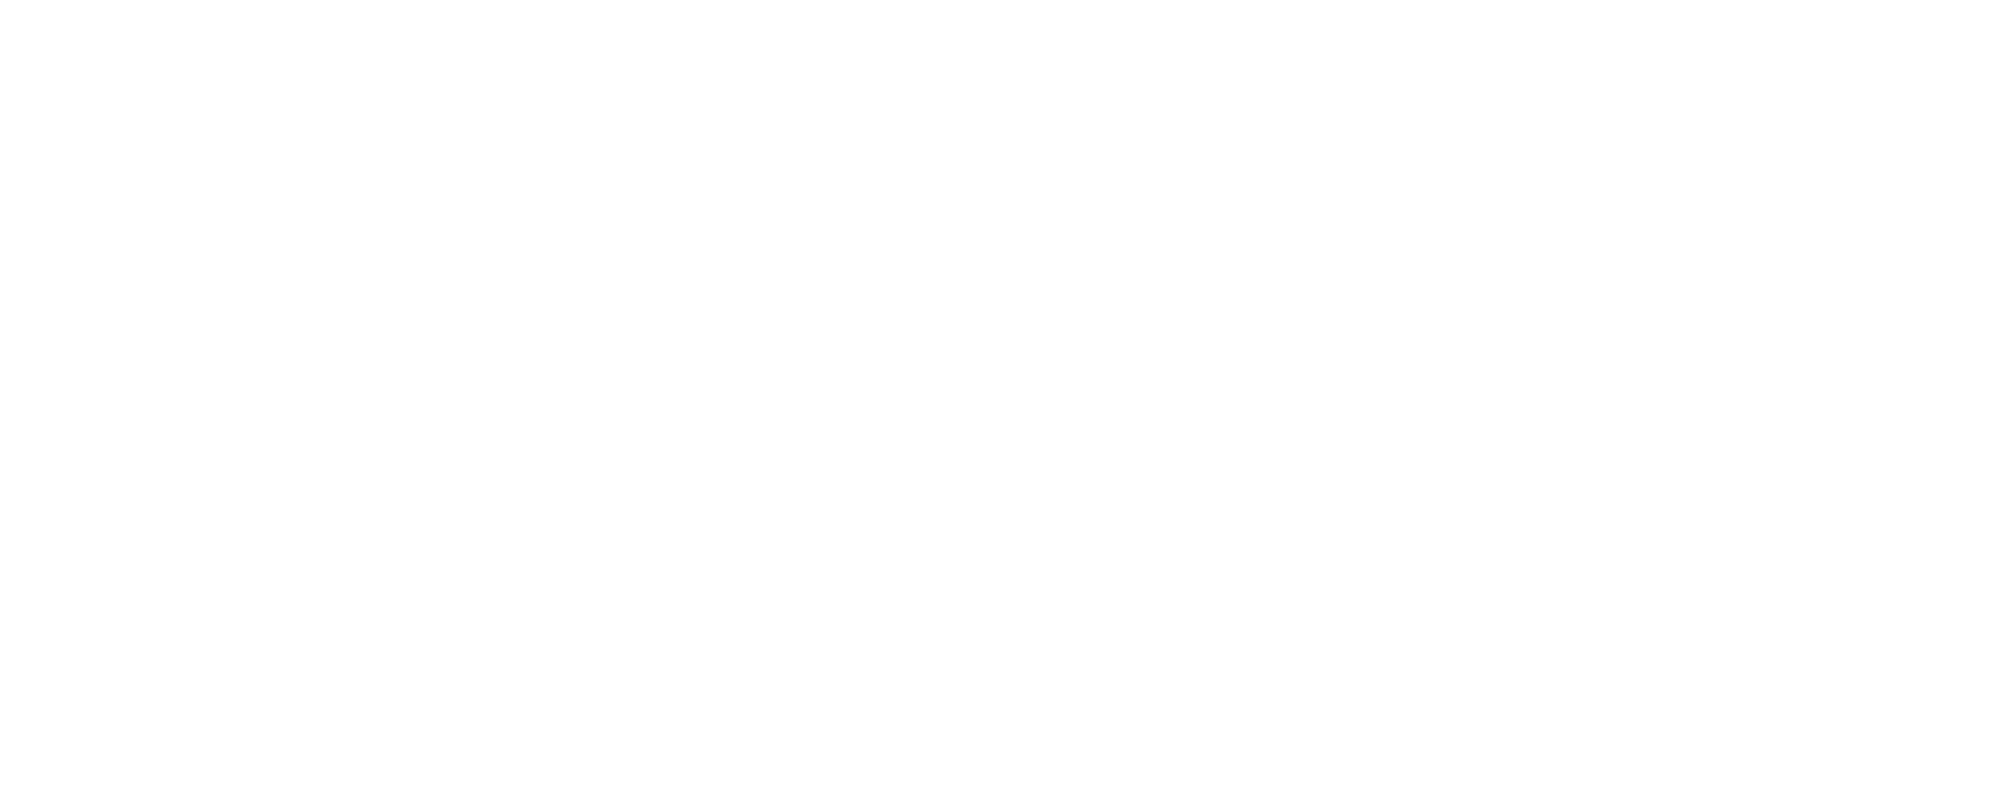 Hutto Yoga and Wellnes 